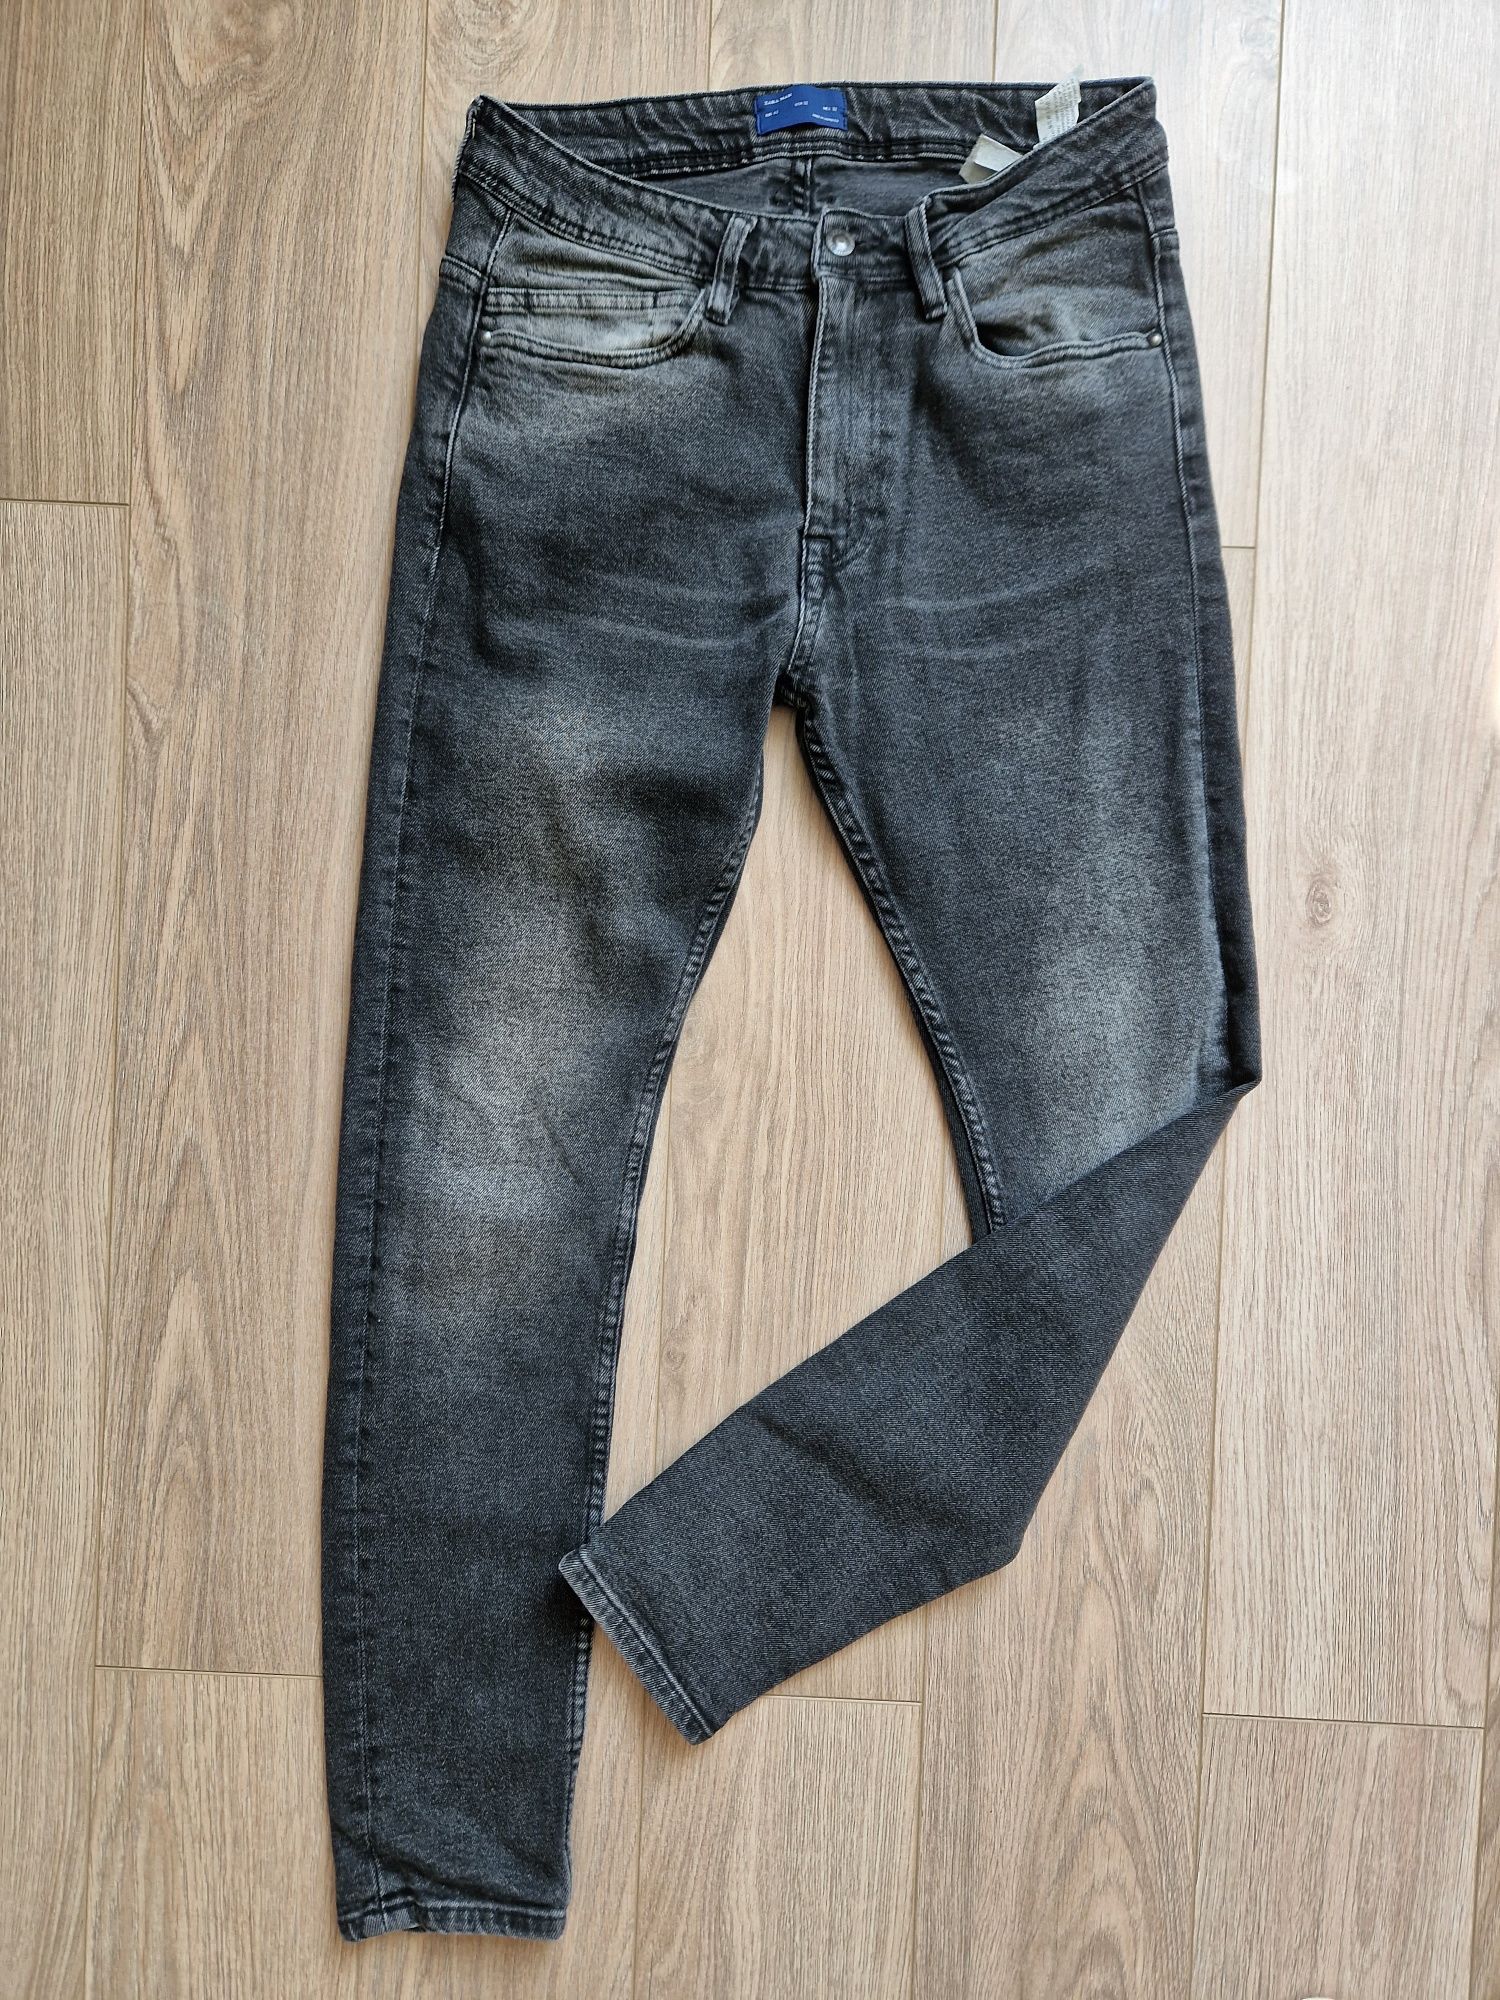 ZARA jeansy męskie mex 32